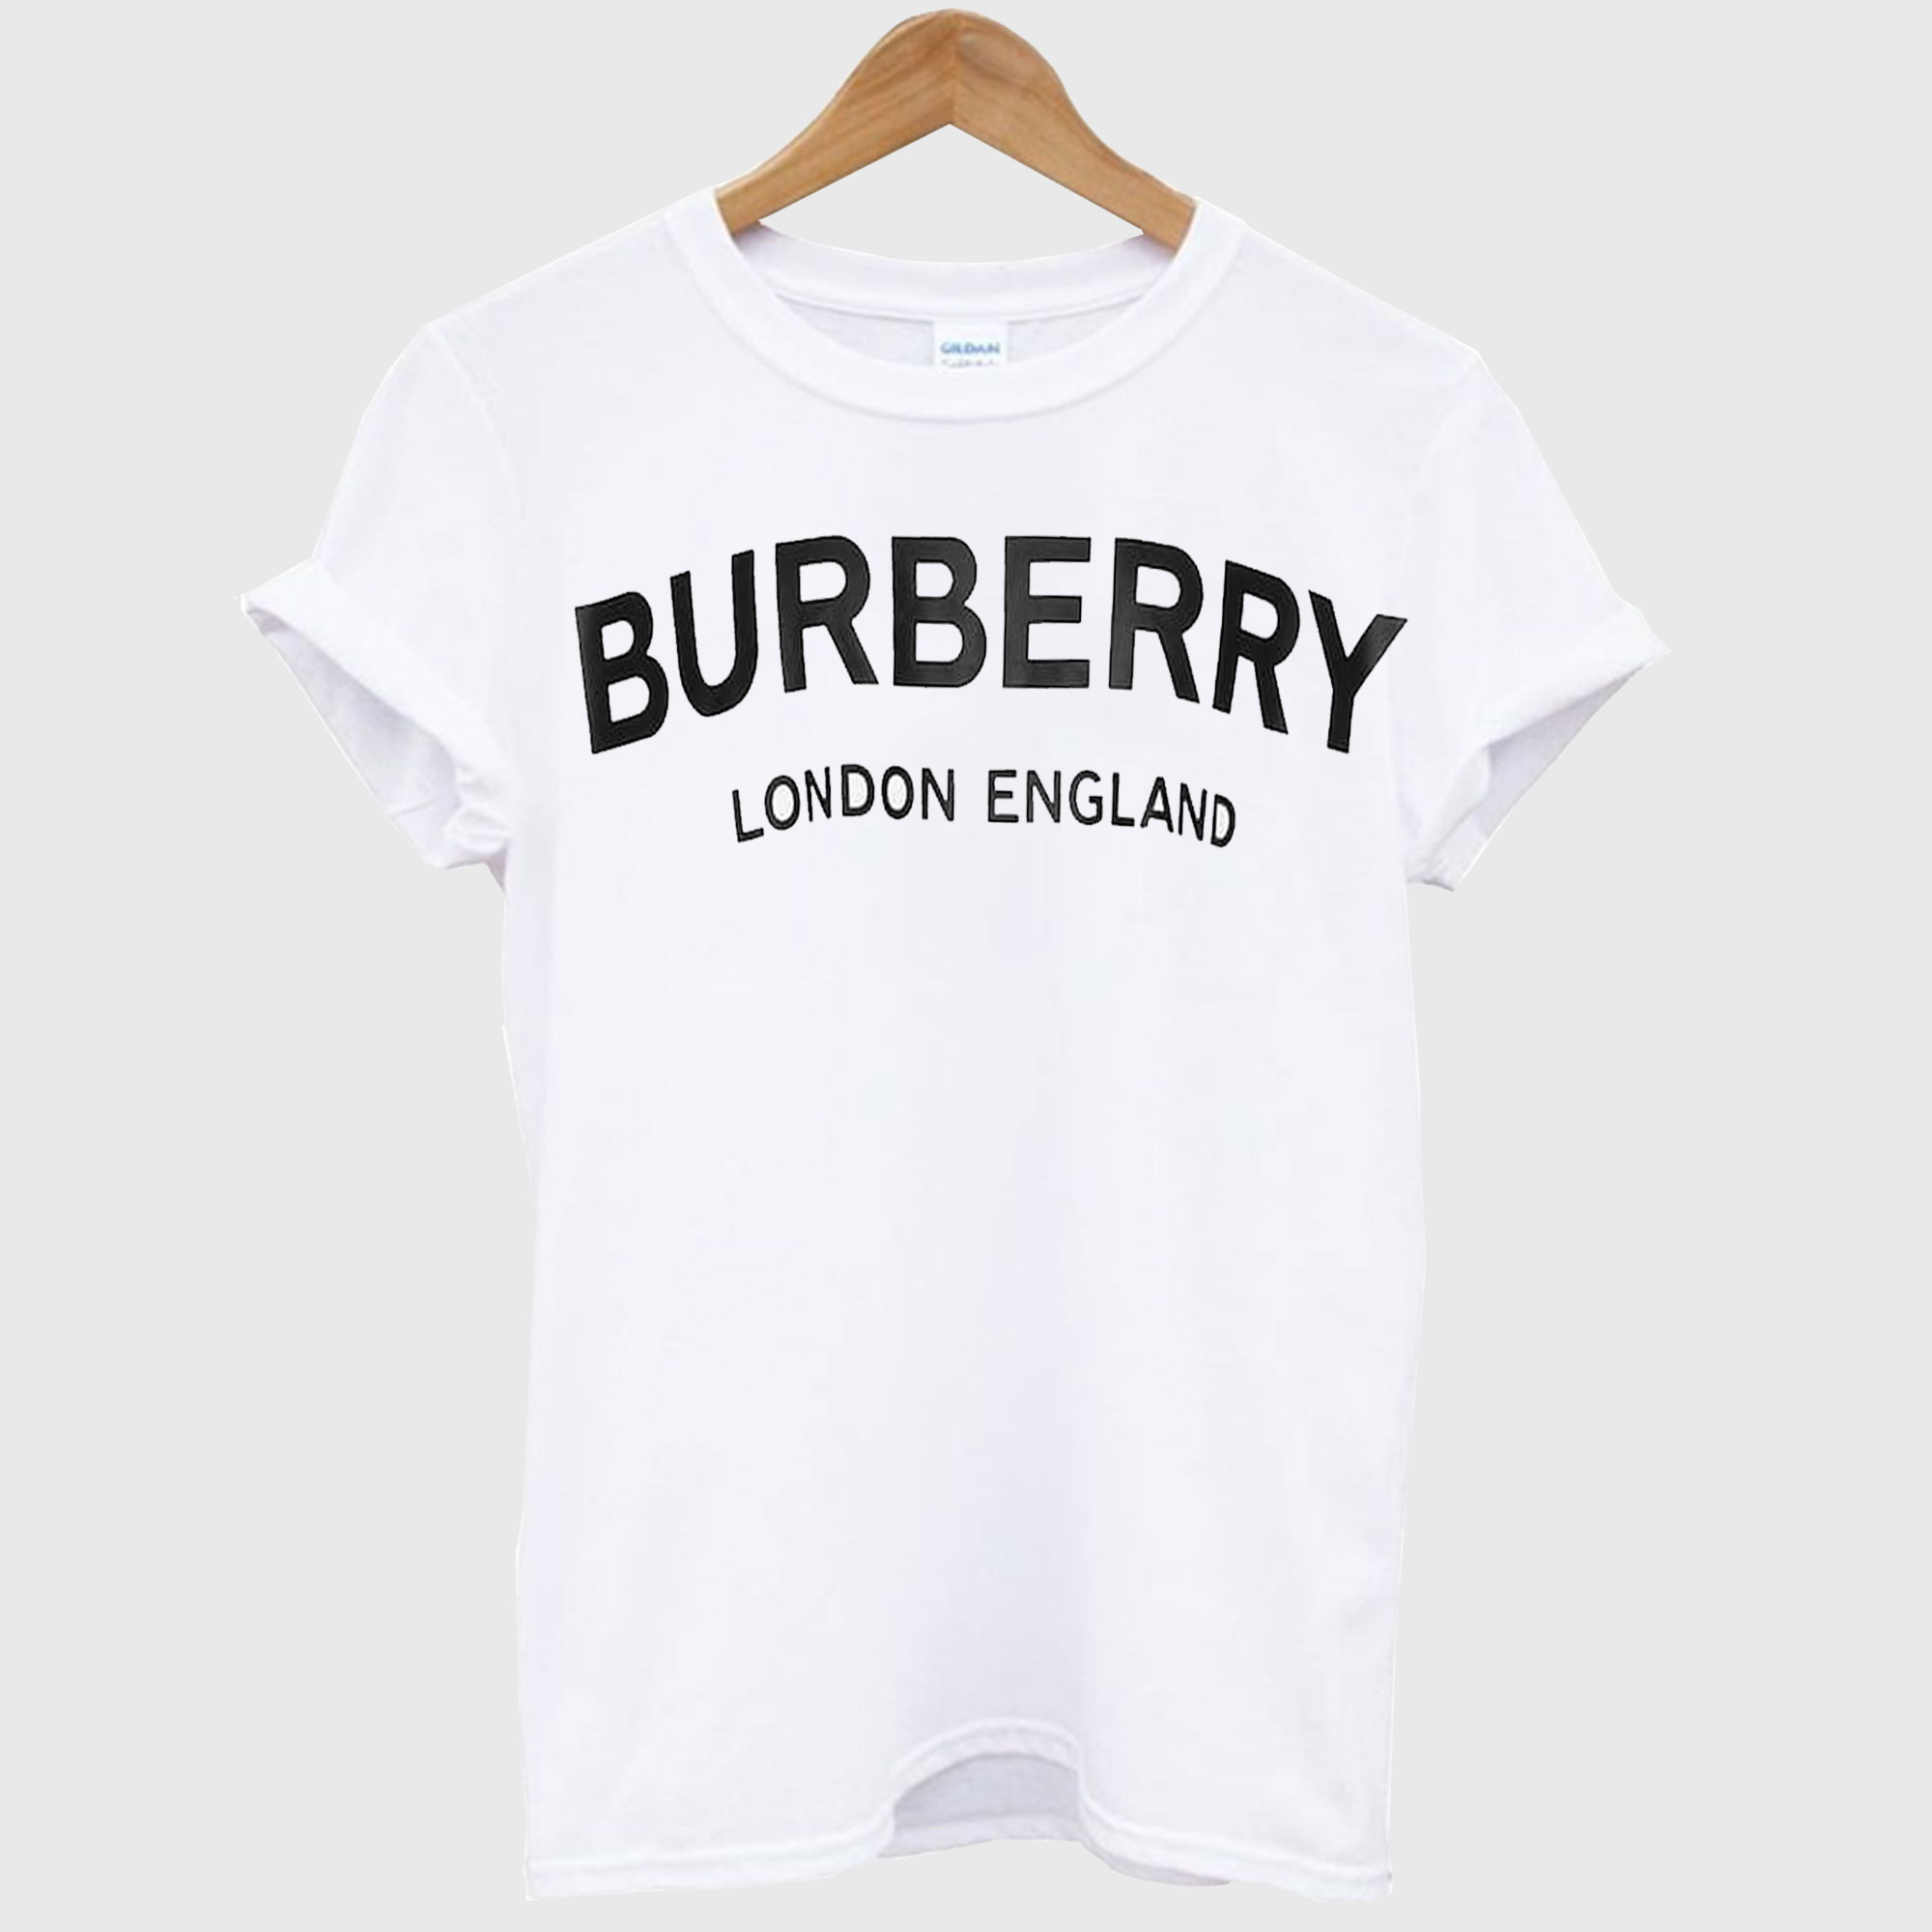 Burberry London England T shirt